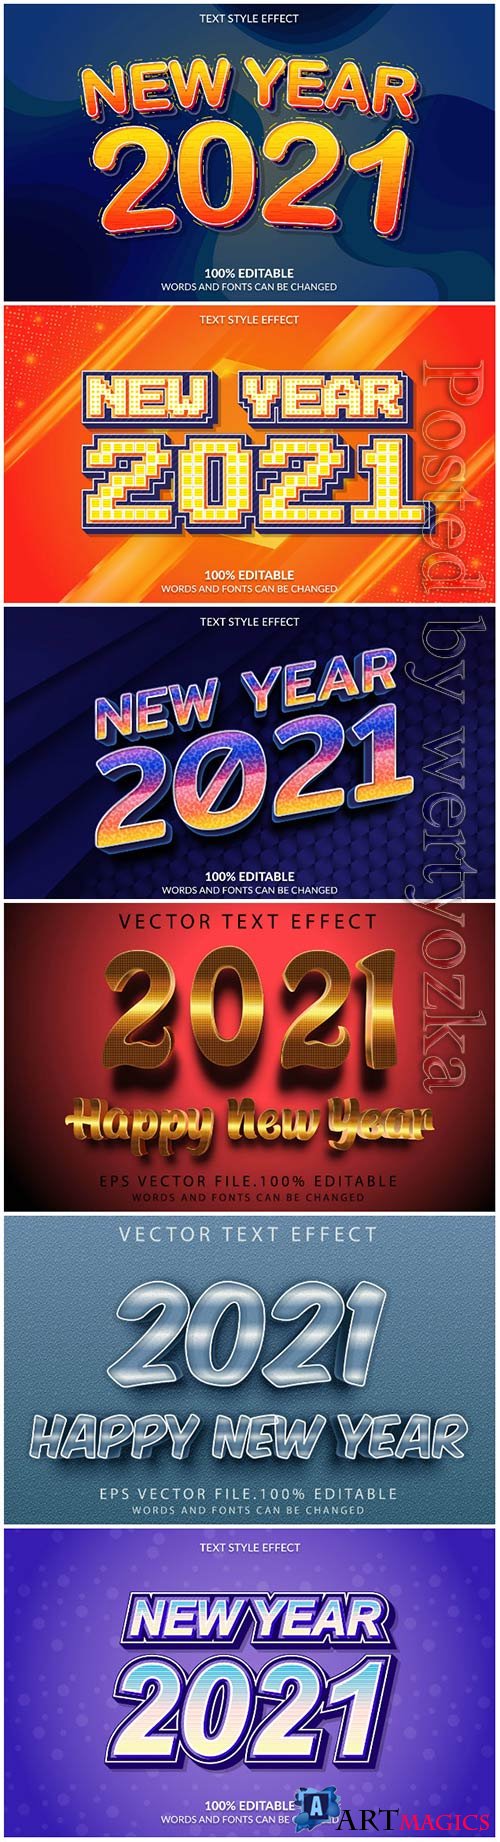 3d editable text style effect vector vol 59